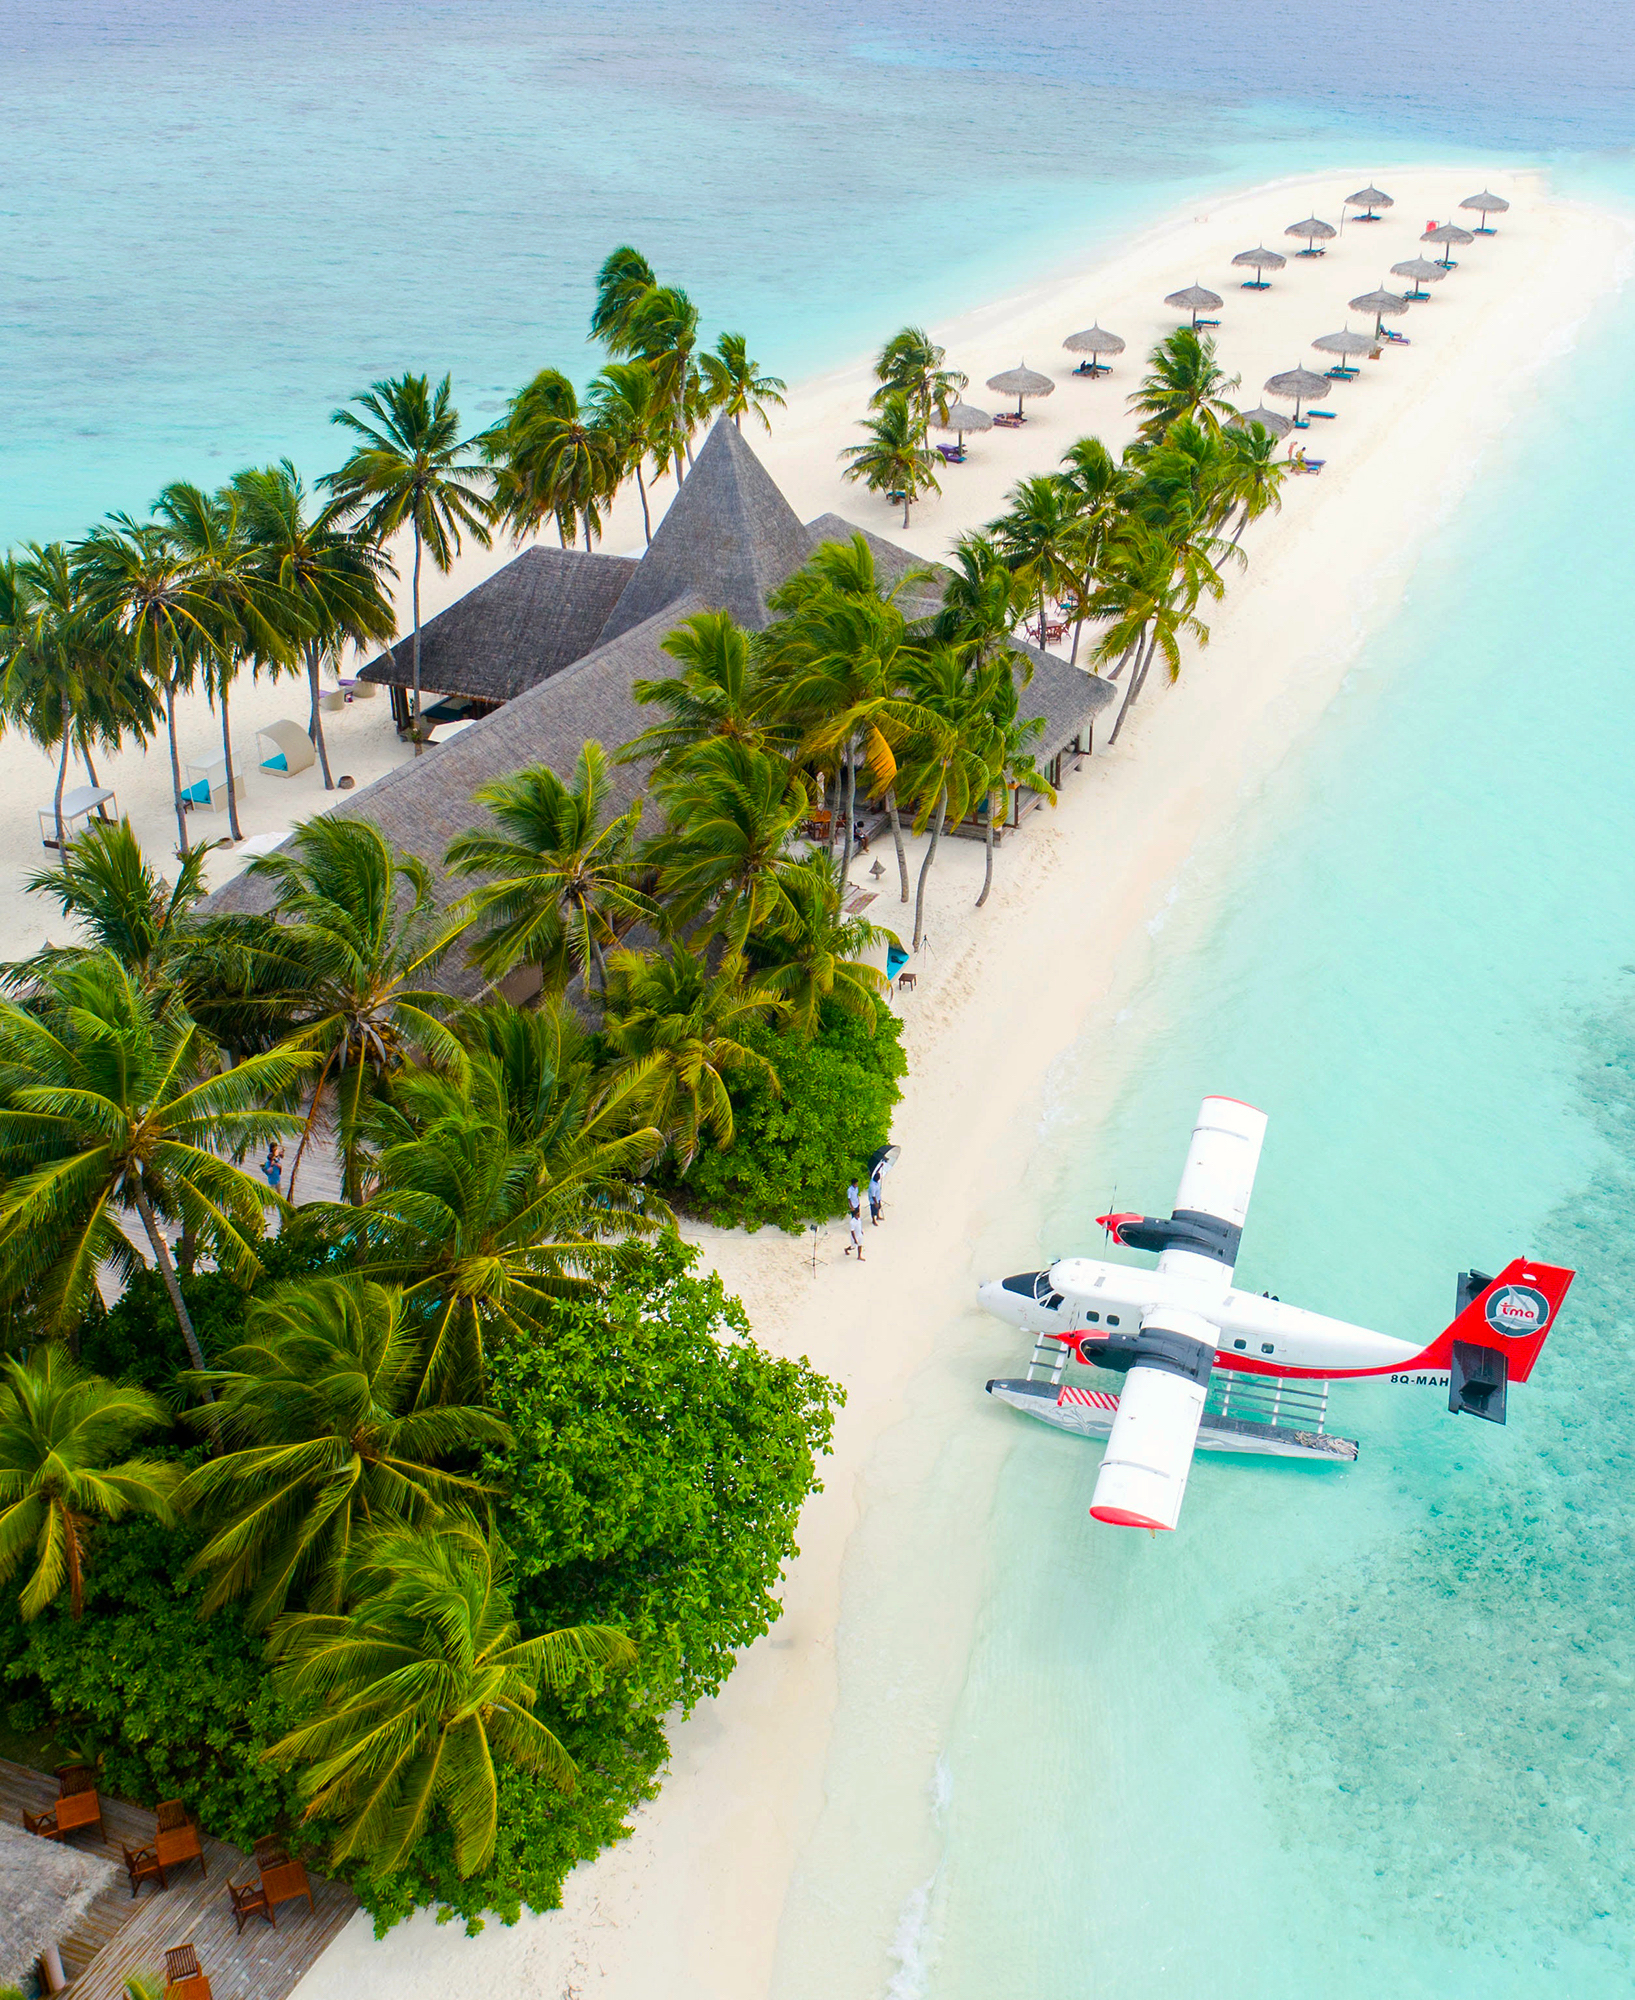 Maldives Seaplane (Shifaaz Shamoon).jpg